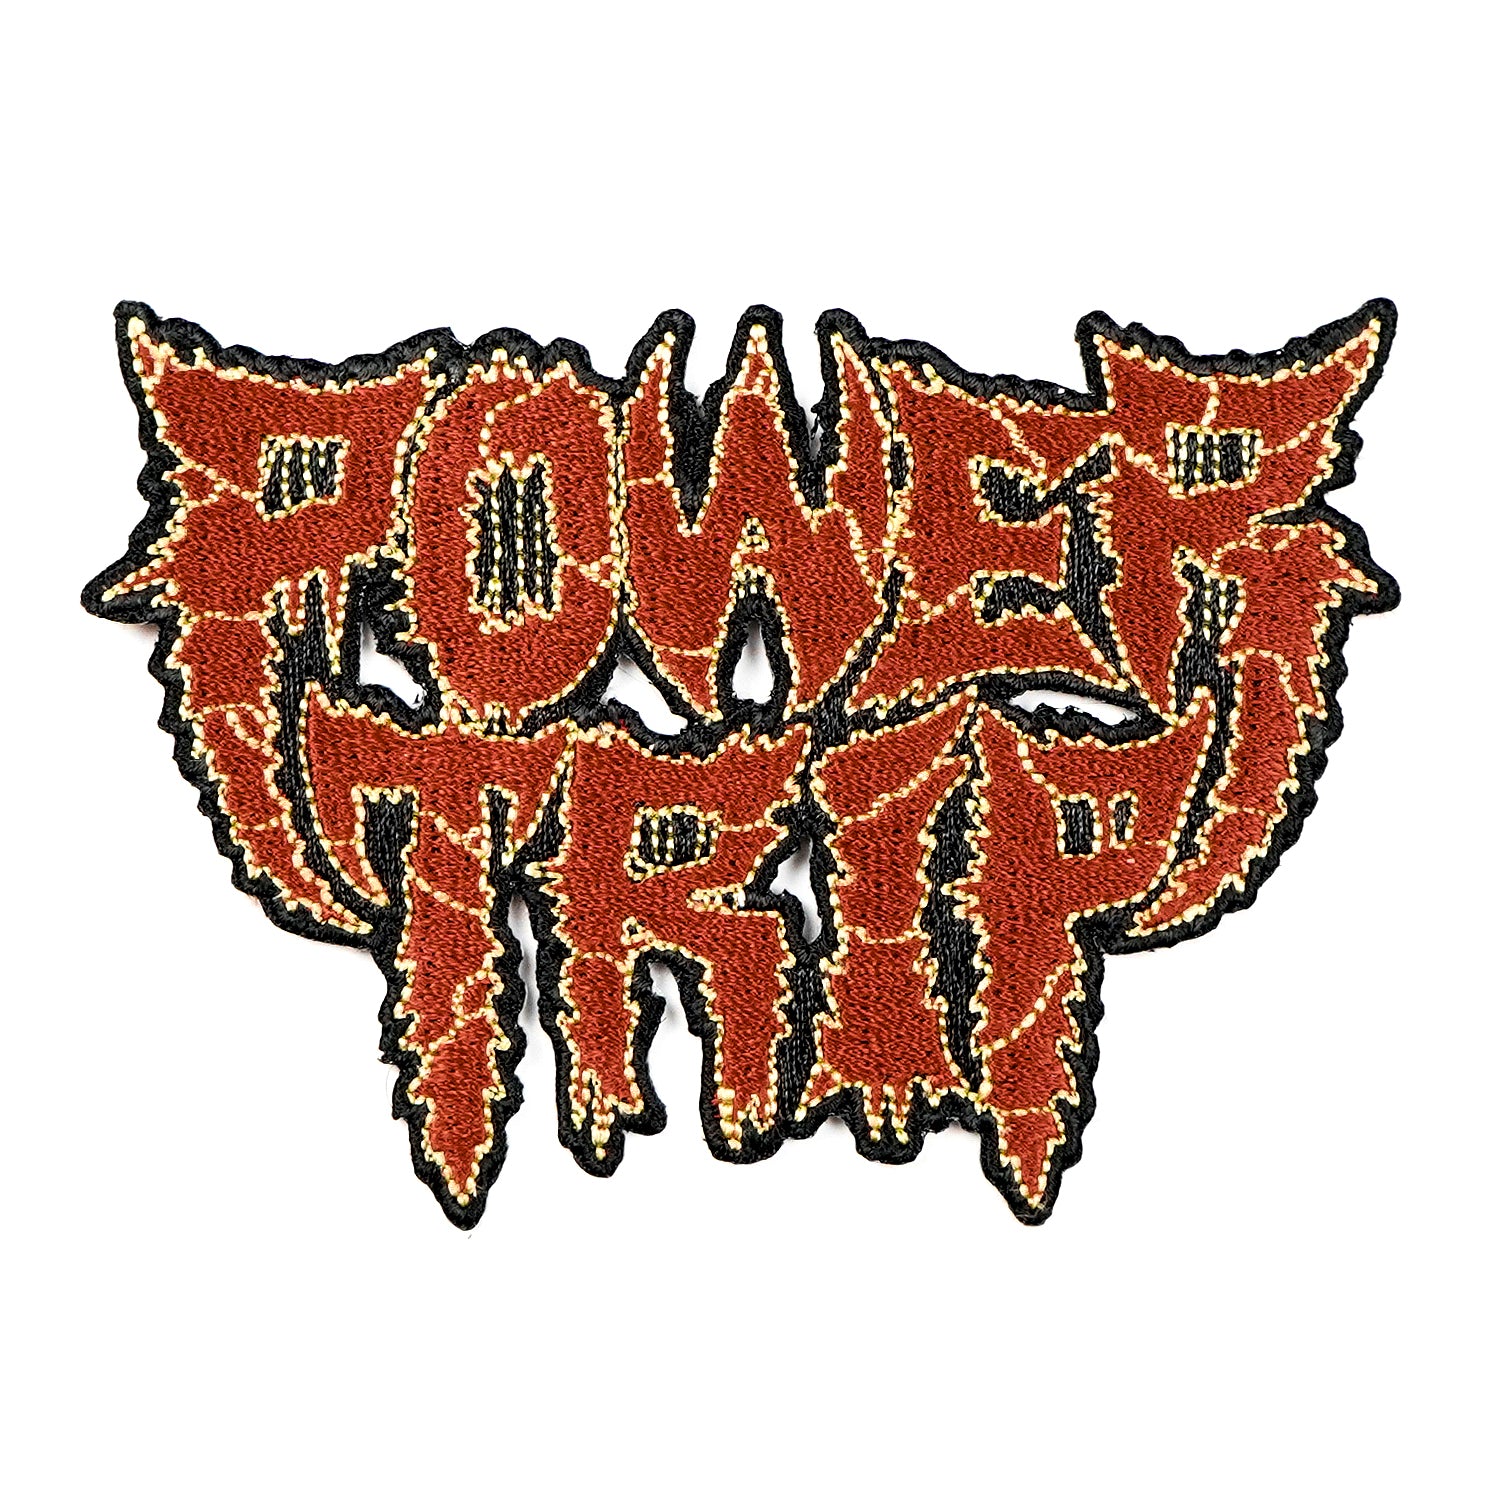 POWER TRIP "Logo Die Cut" Patch